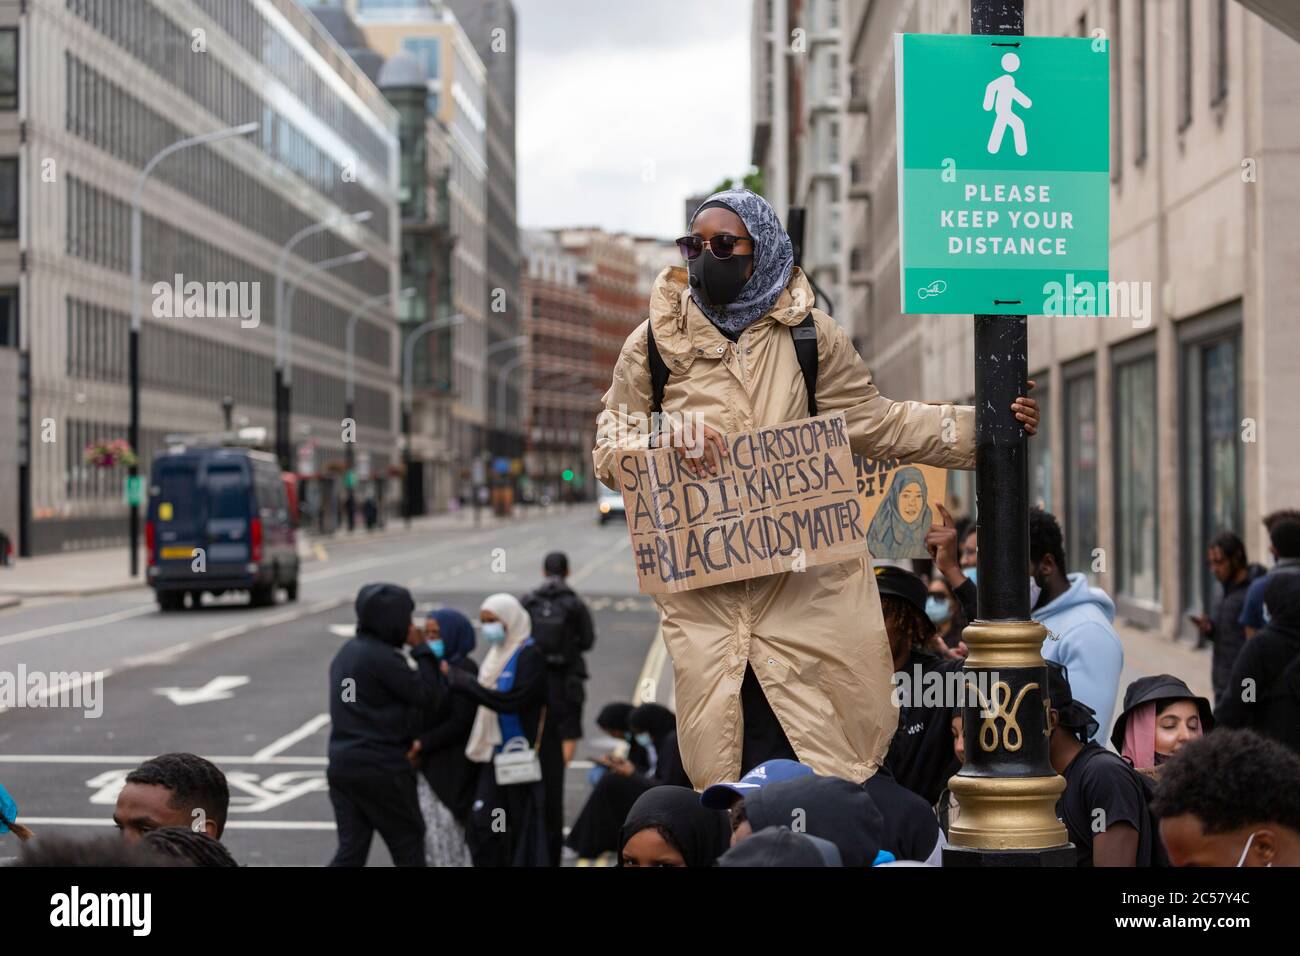 A protester stands beside social distancing signage, Black Lives Matter demonstration, London, 27 June 2020 Stock Photo